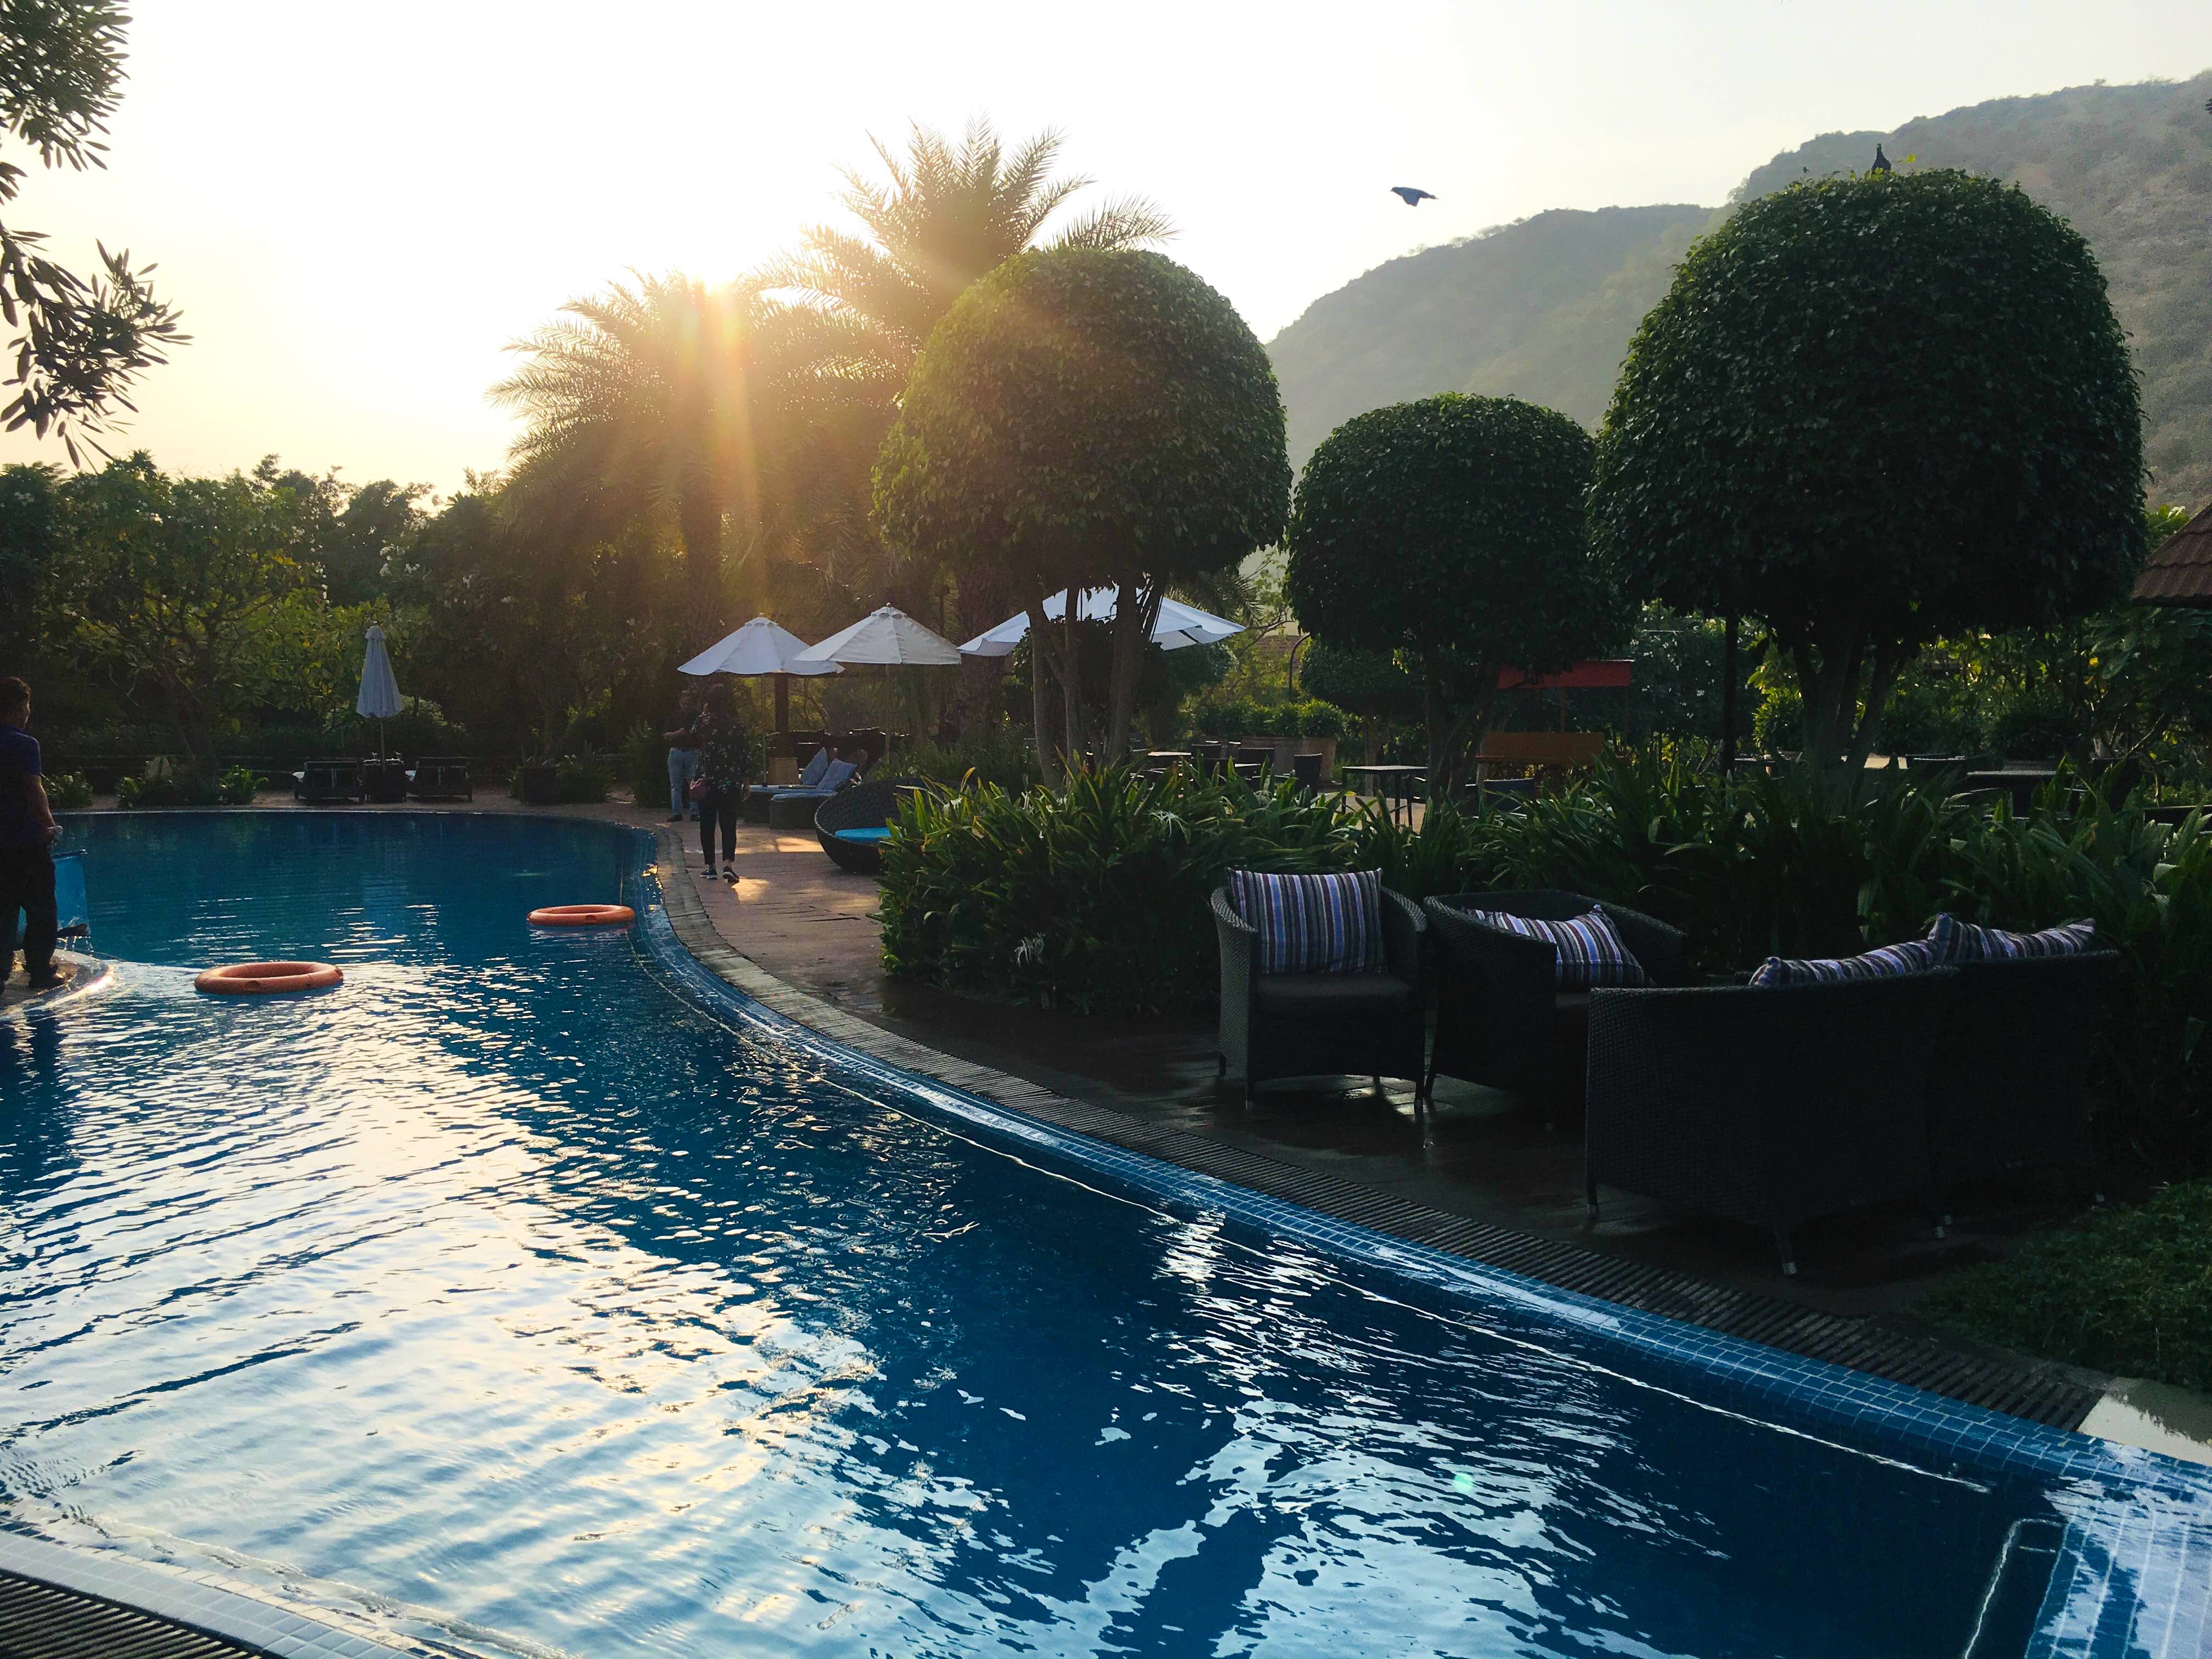 Swimming pool,Sky,Water,Tree,Vacation,Leisure,Resort,Palm tree,Reflecting pool,Summer